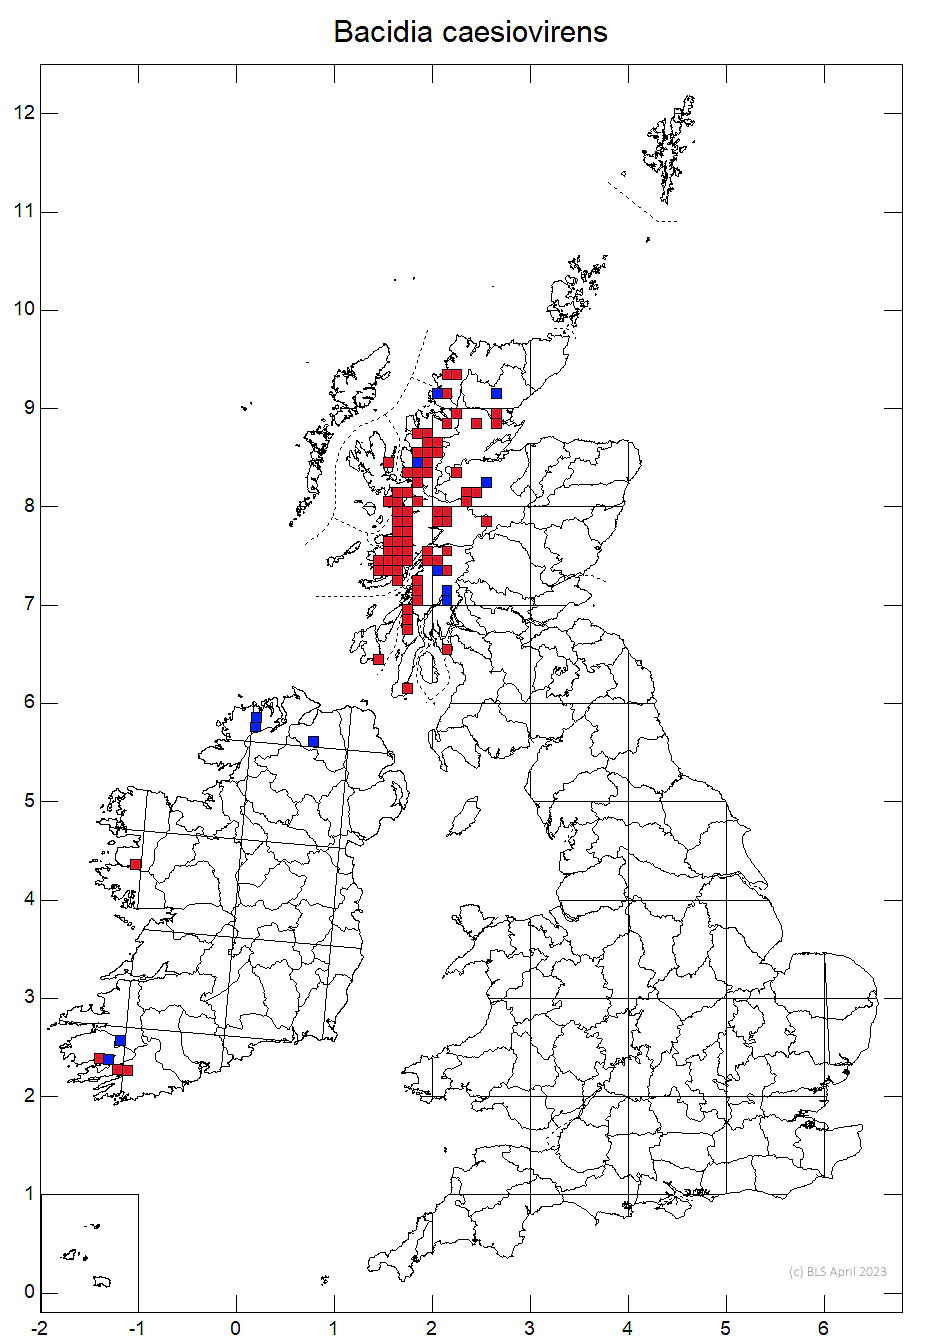 Bacidia caesiovirens 10km sq distribution map